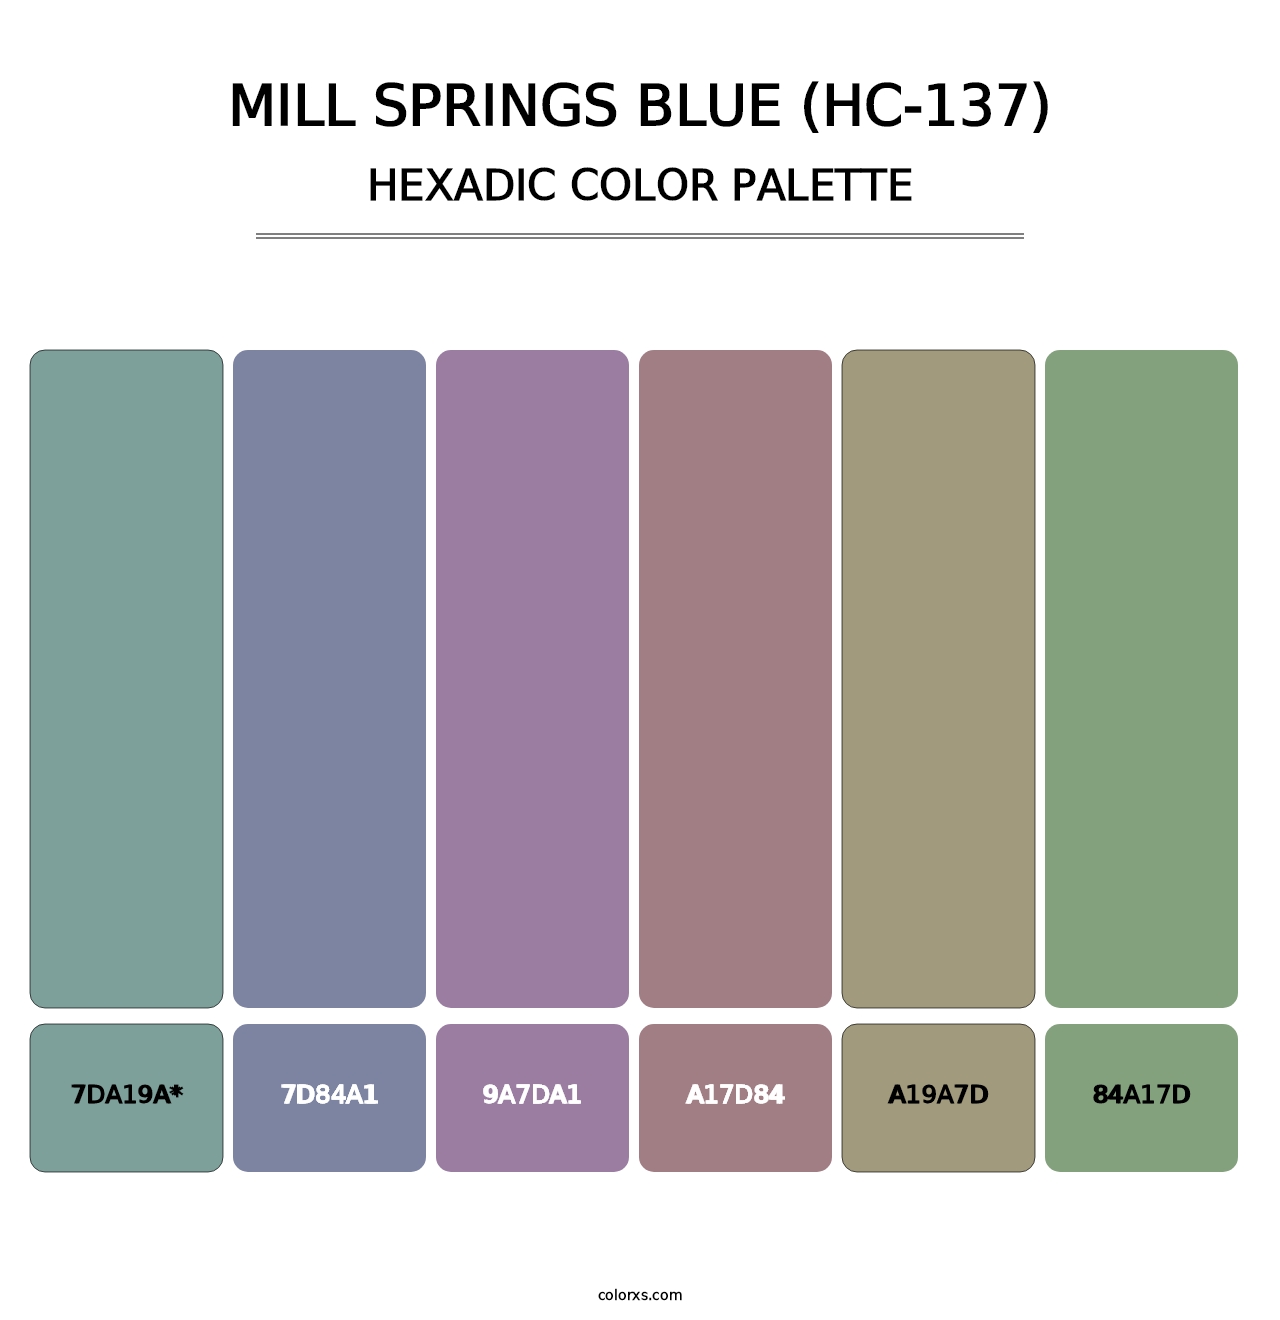 Mill Springs Blue (HC-137) - Hexadic Color Palette